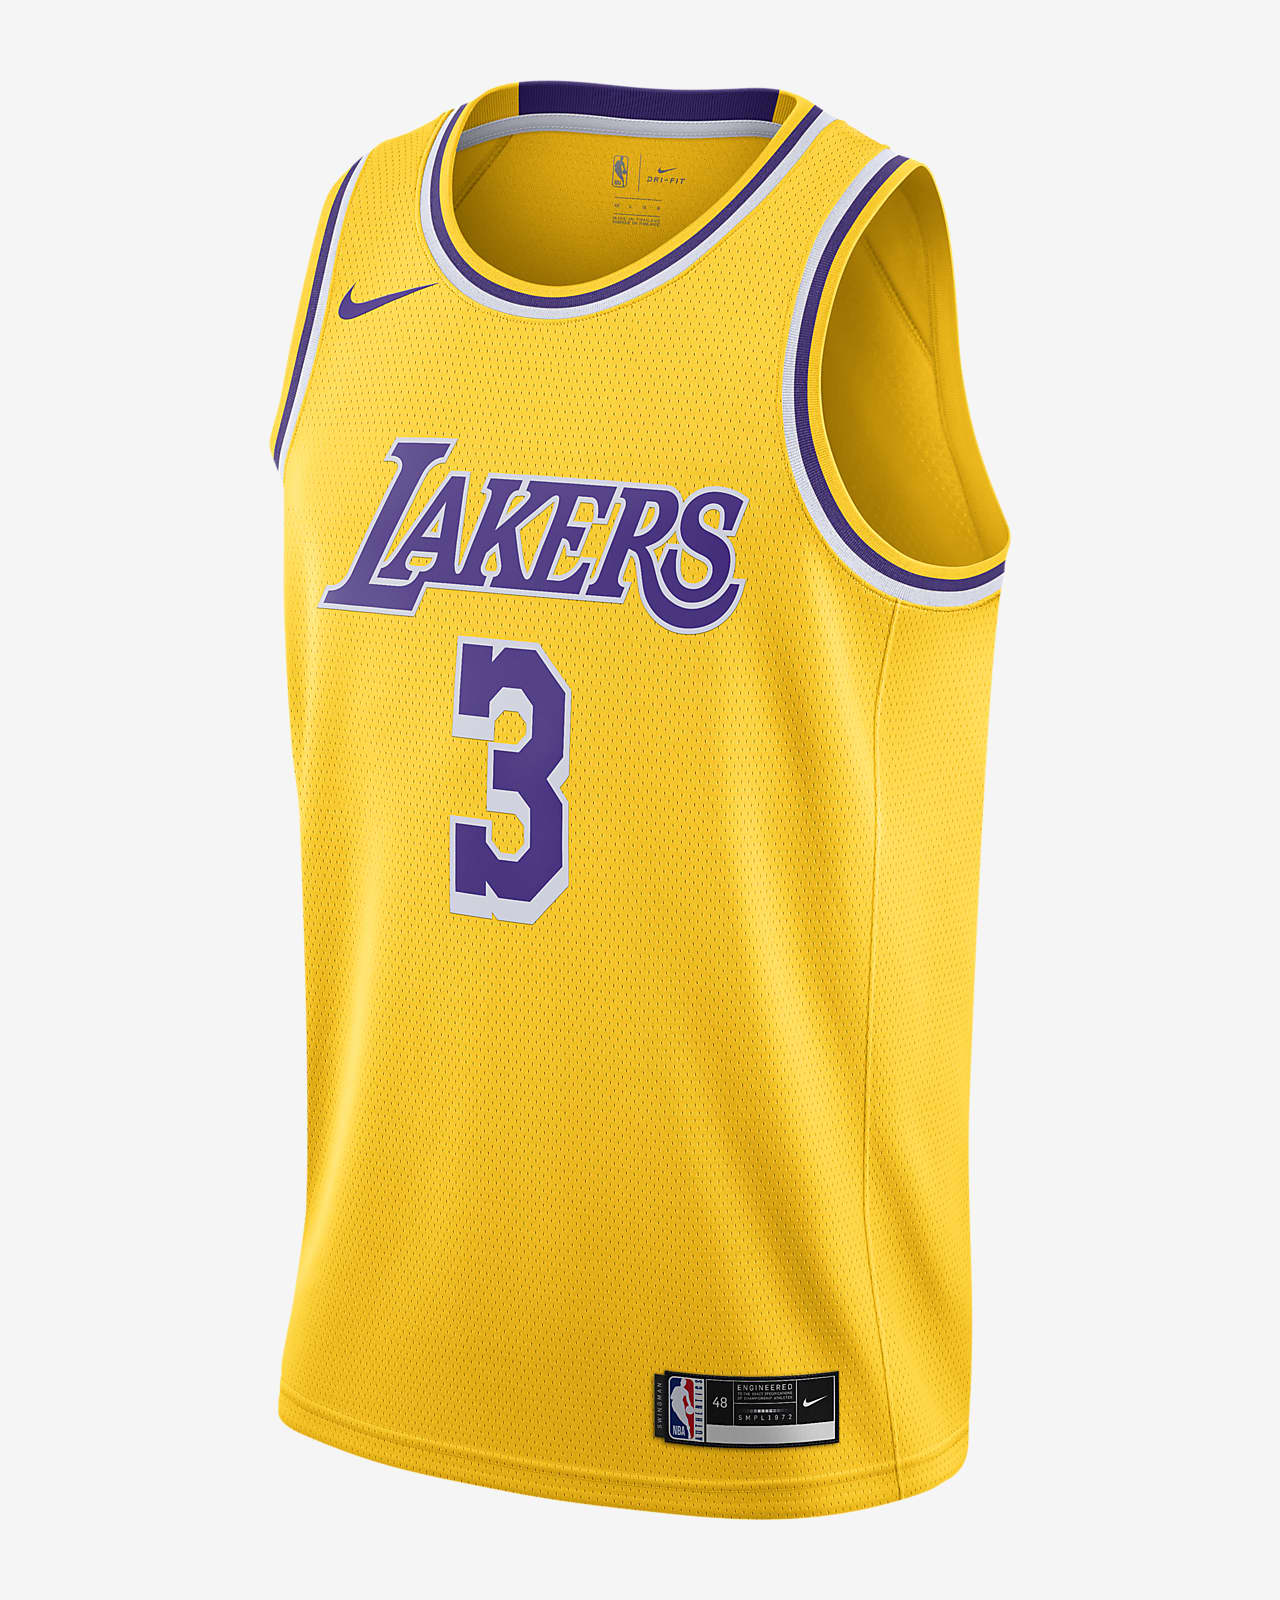 2020 赛季洛杉矶湖人队 (Anthony Davis) Icon Edition Nike NBA Swingman Jersey 男子球衣